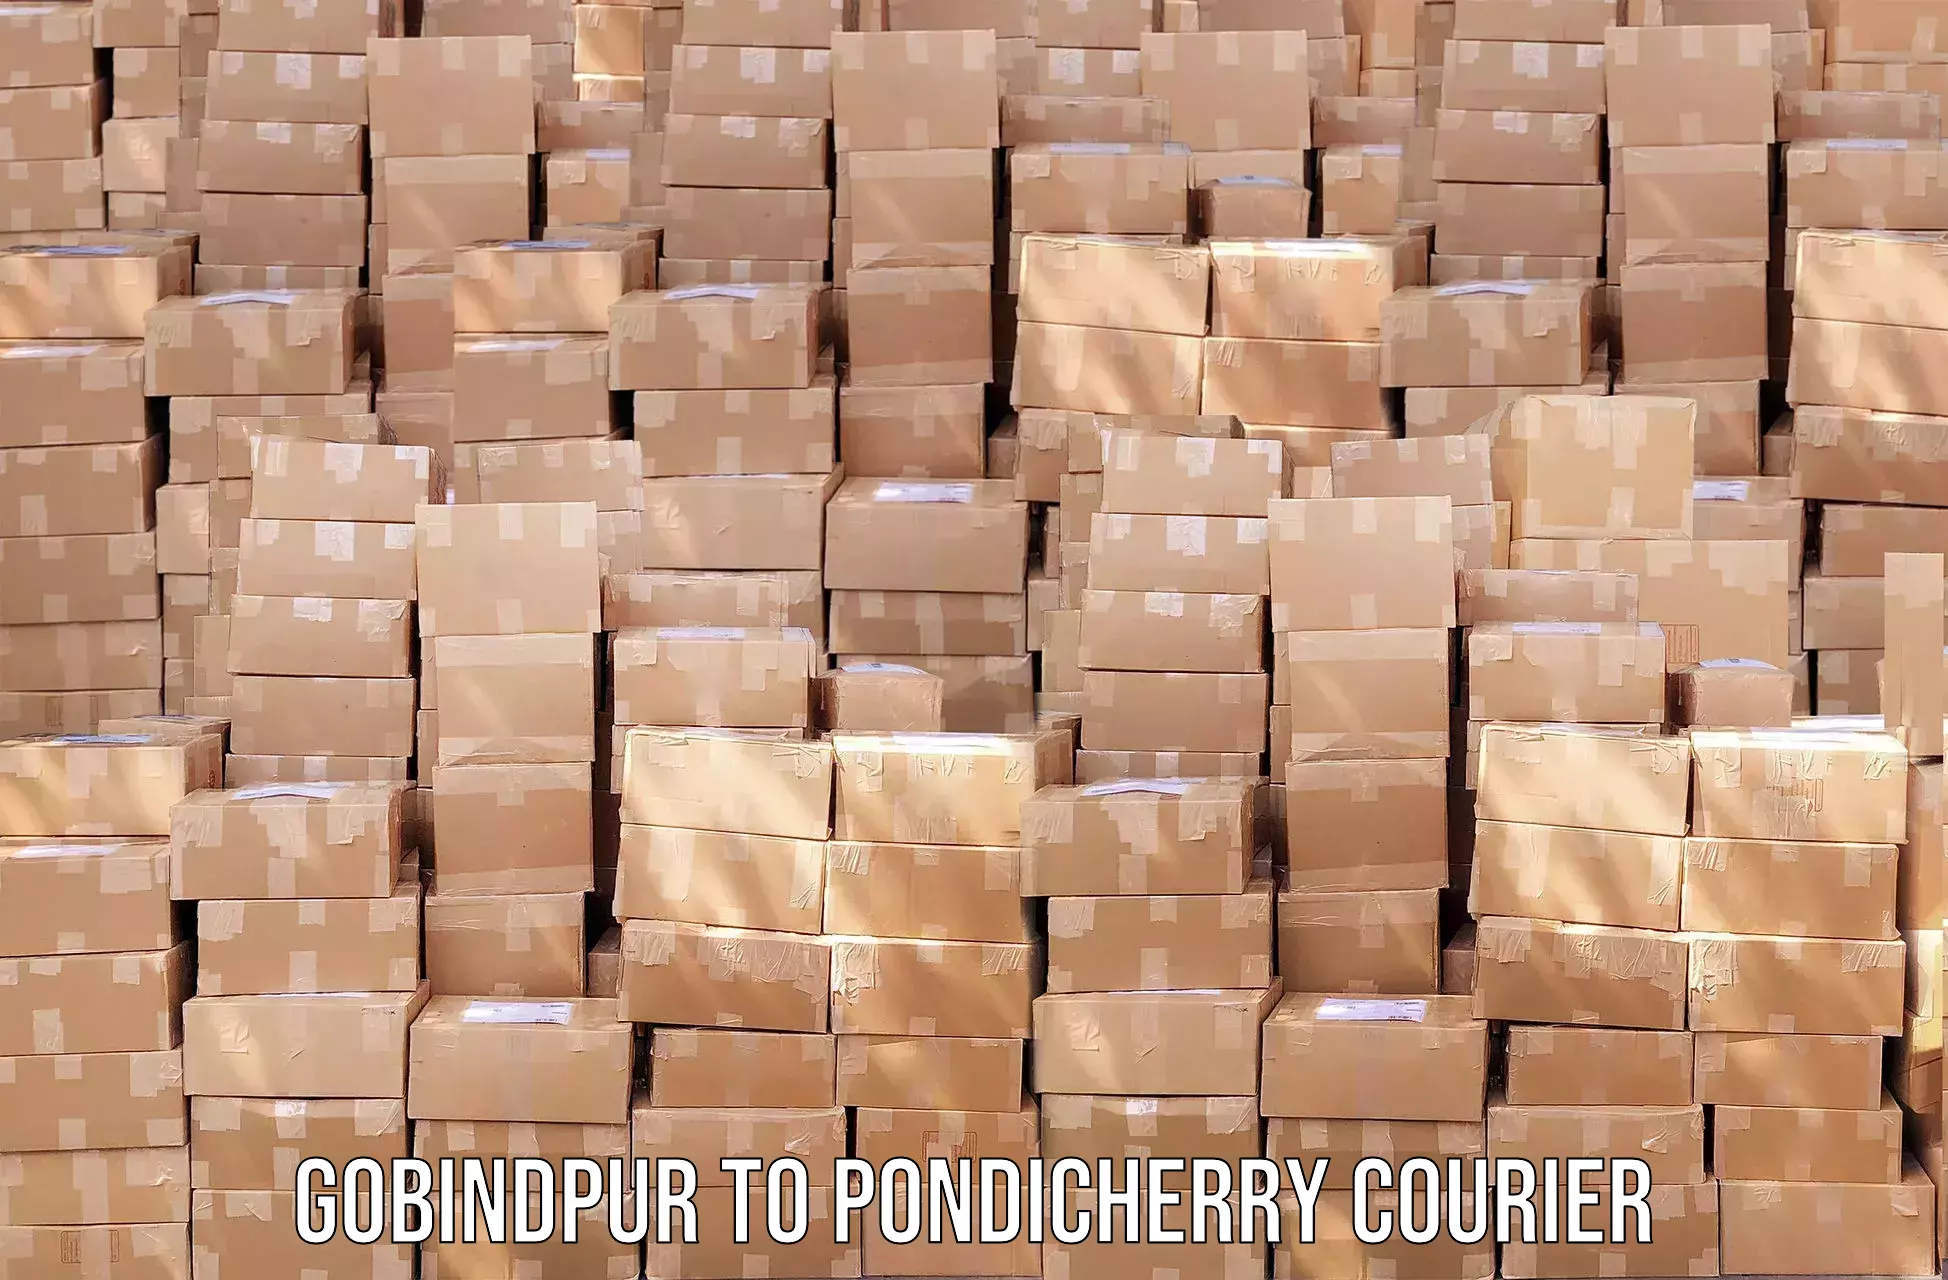 High-capacity parcel service Gobindpur to Pondicherry